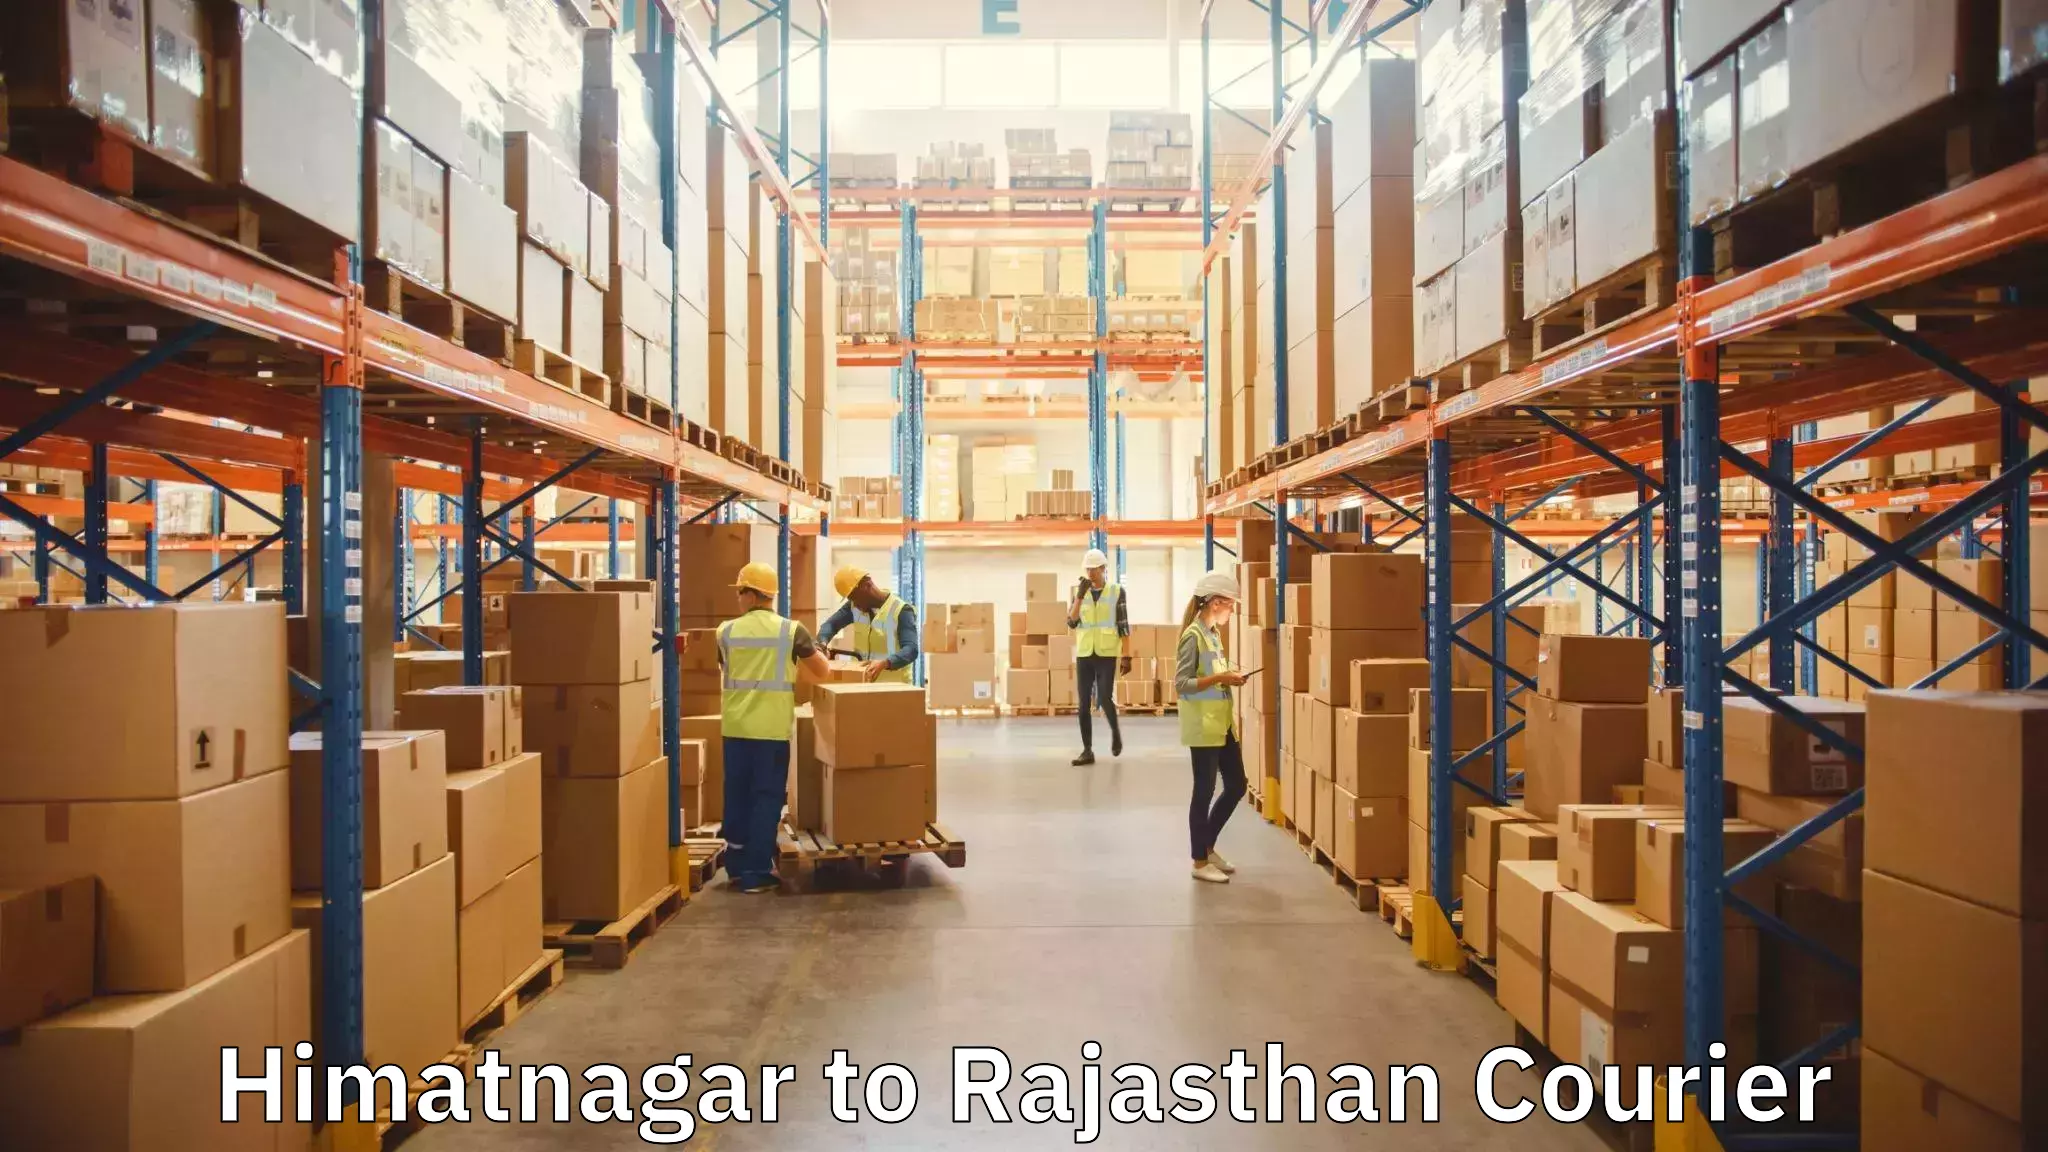 Professional moving company Himatnagar to Merta